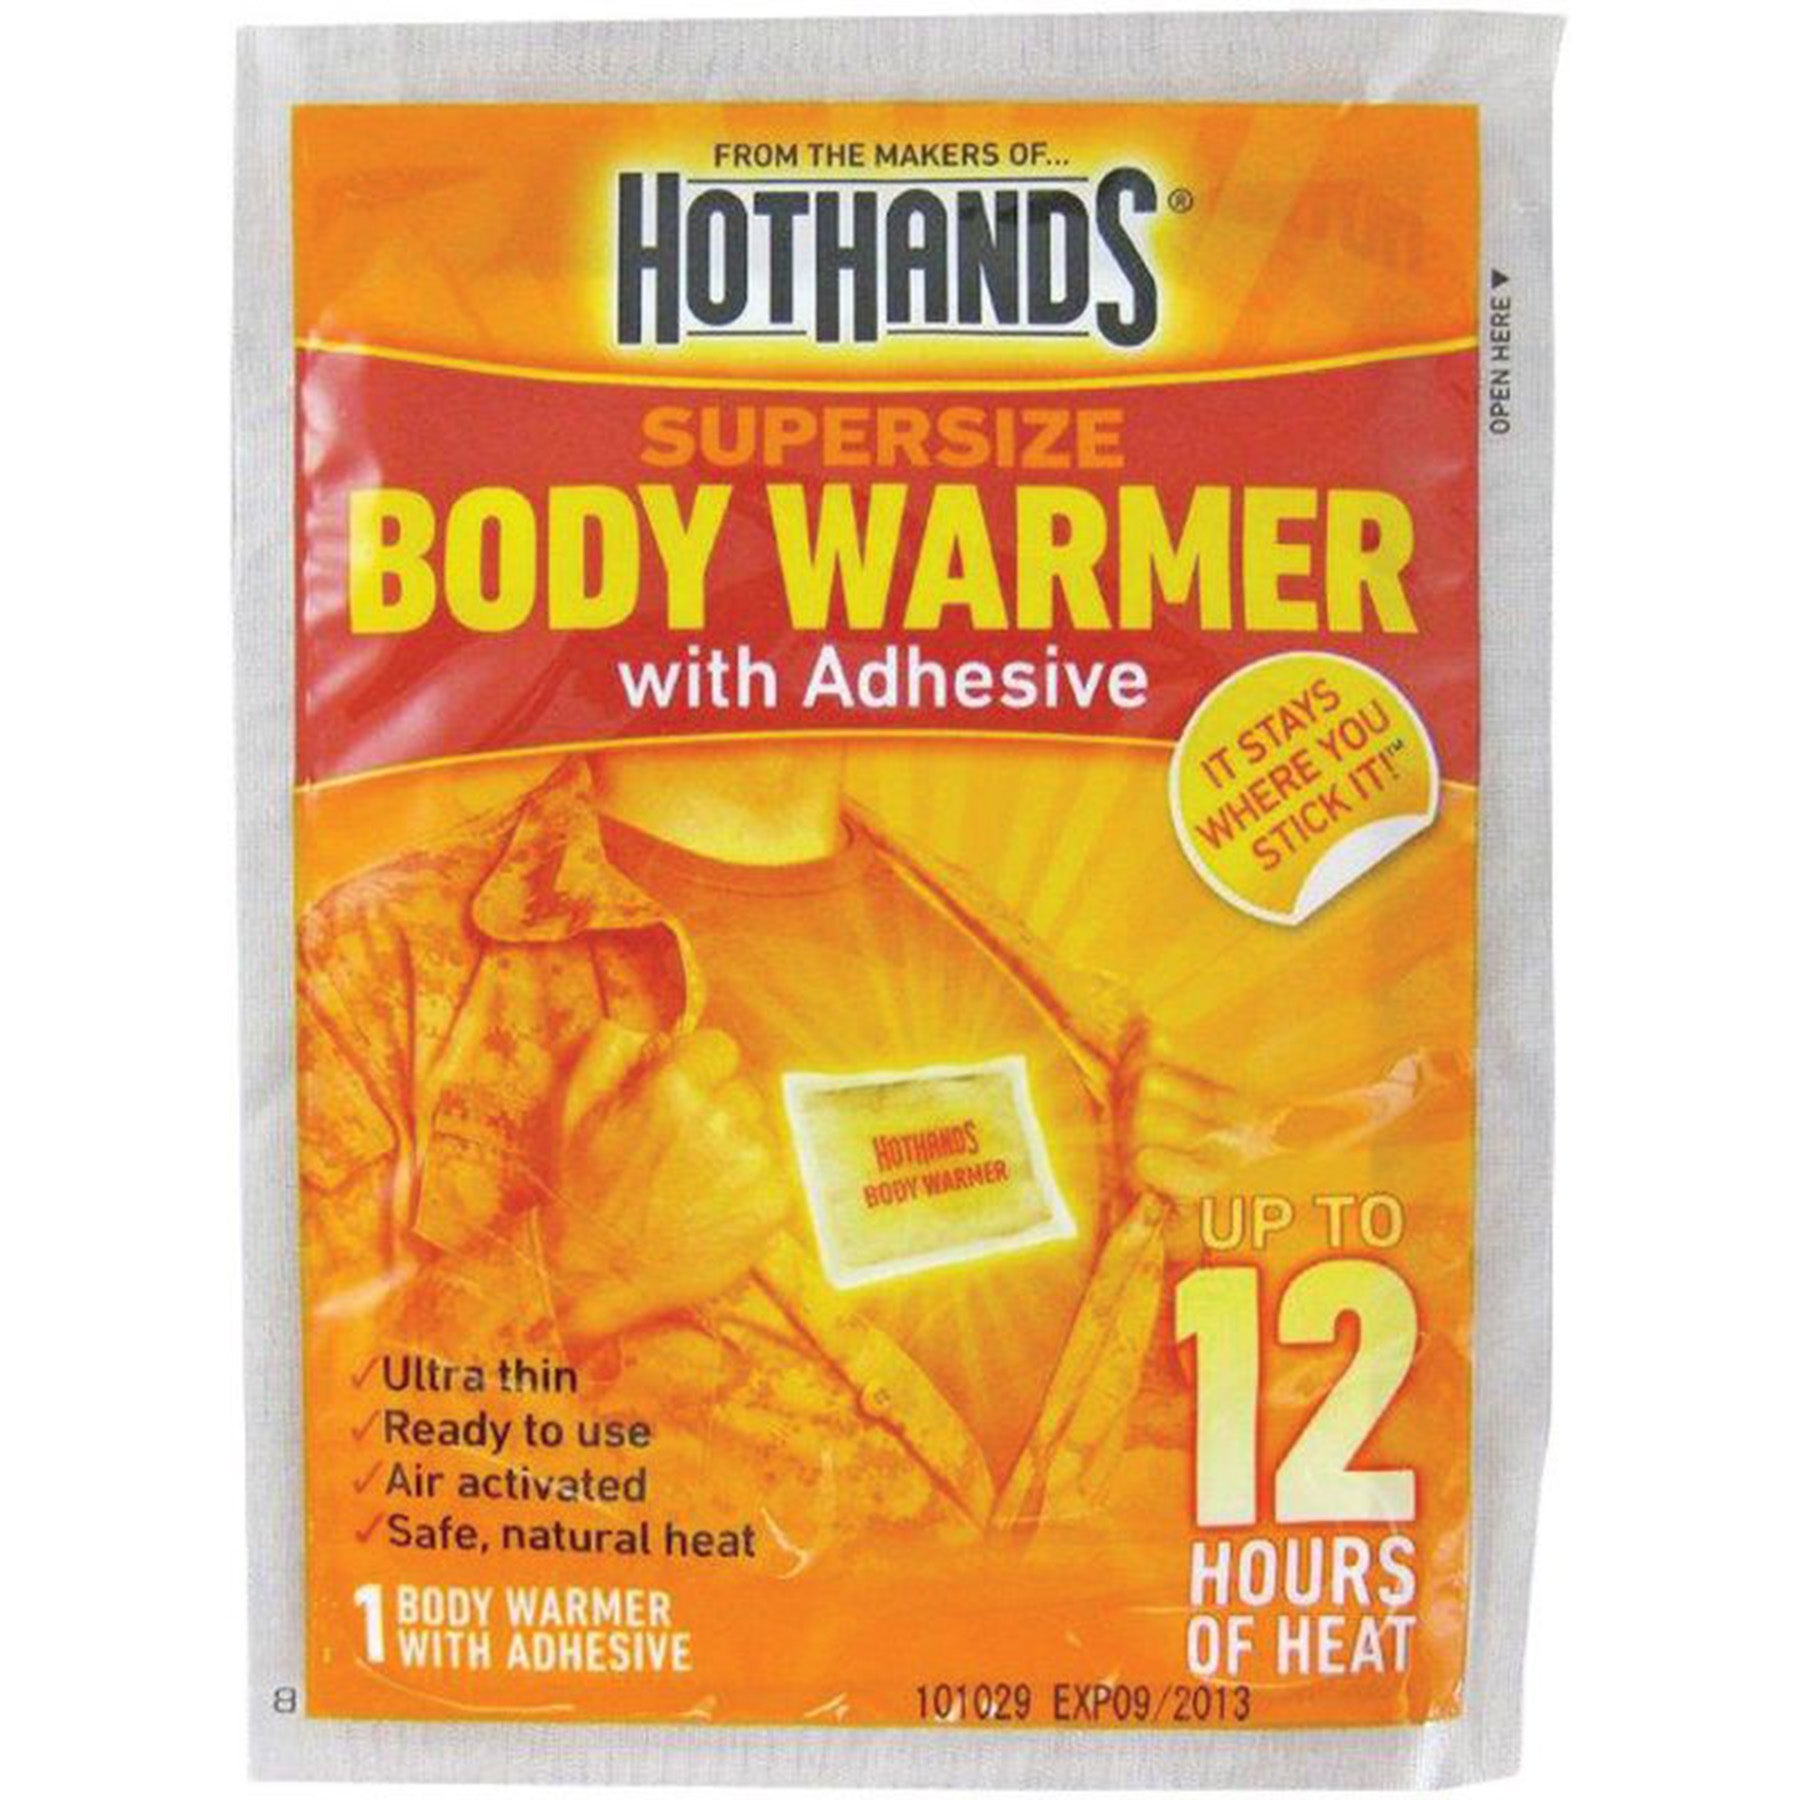 a self heating body warmer